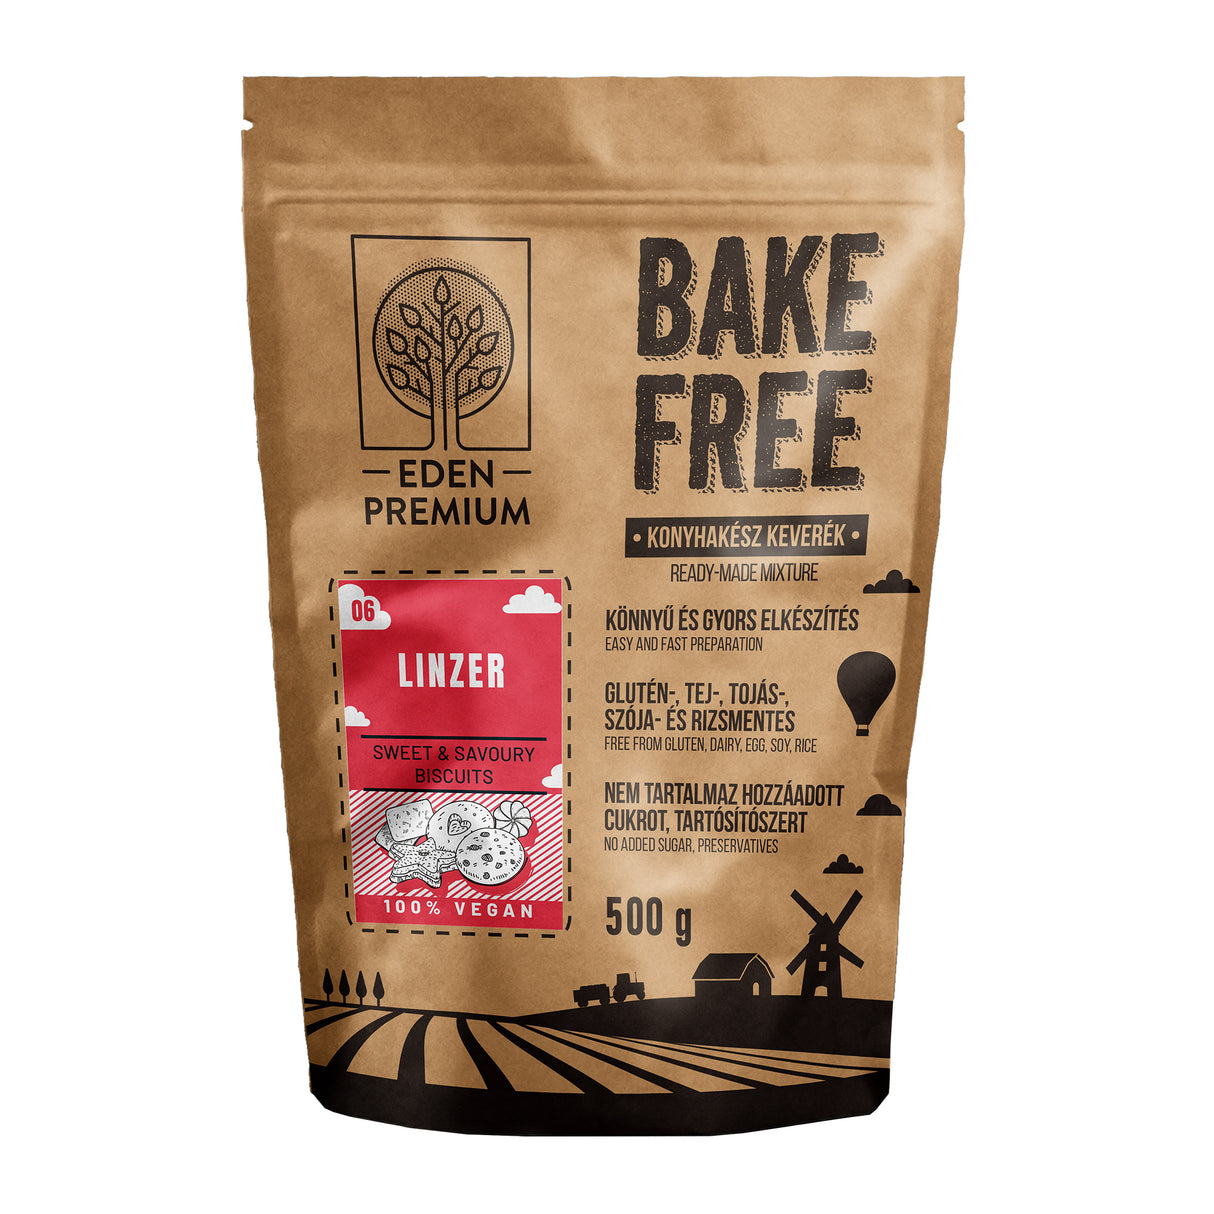 Bake-Free Linzer lisztkeverék 500g